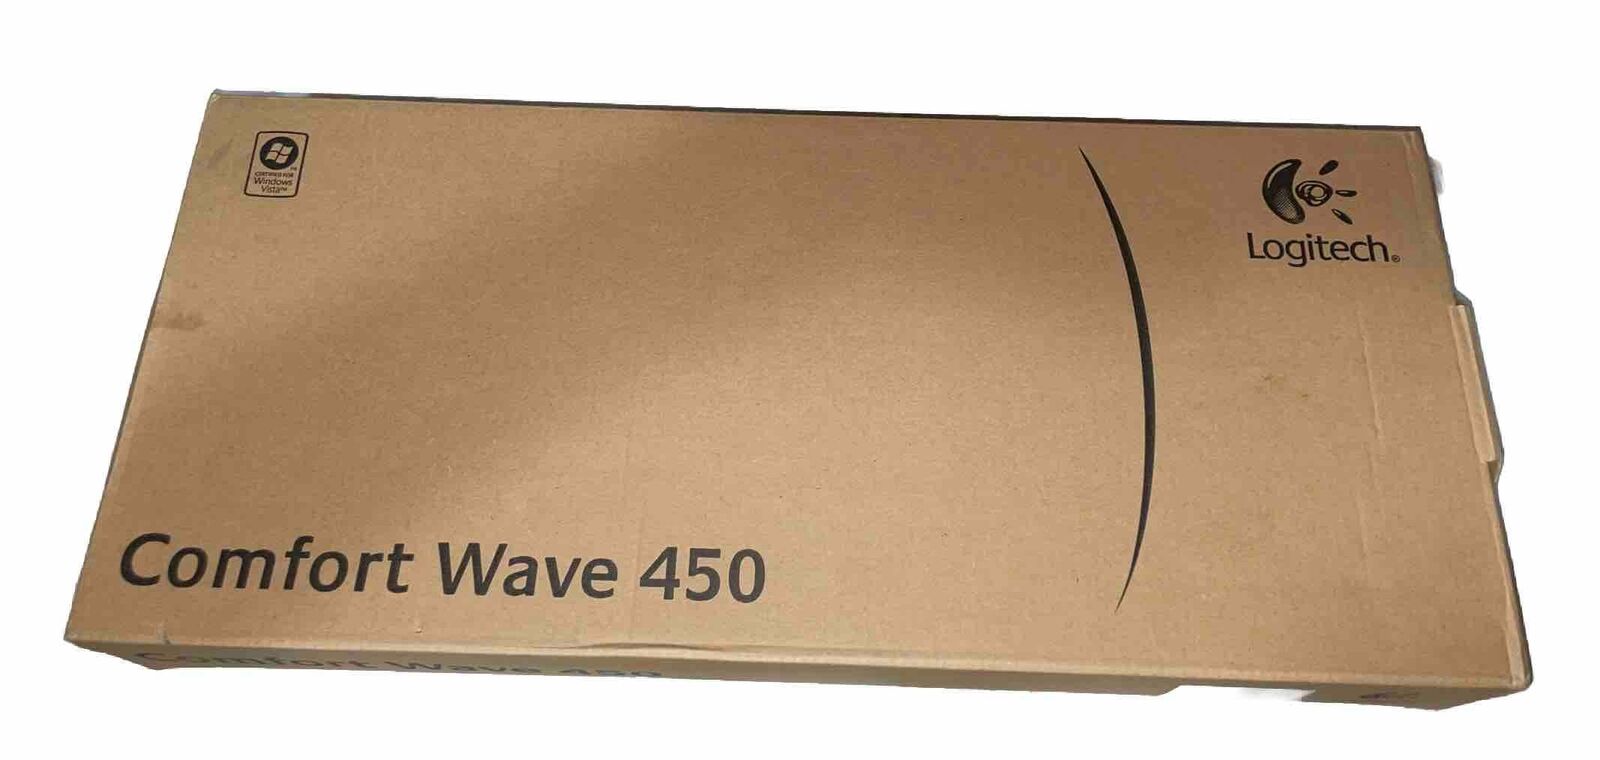 New In Box Logitech Comfort Wave 450 Keyboard Rare